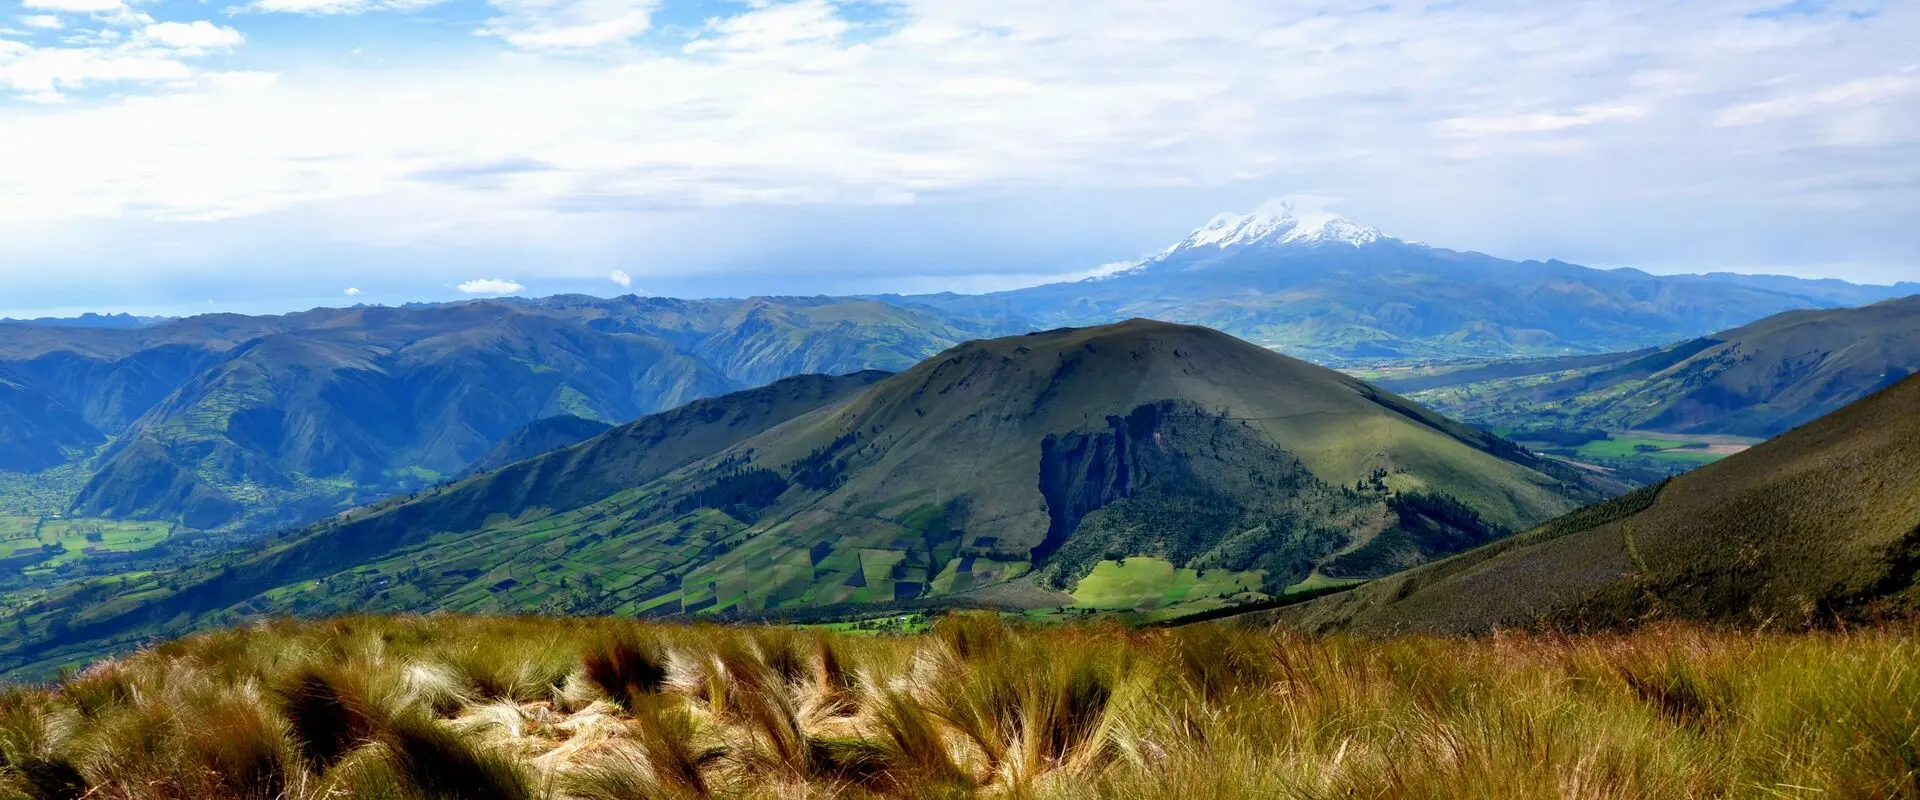 Panorama from the slopes of the Imbabura volcano